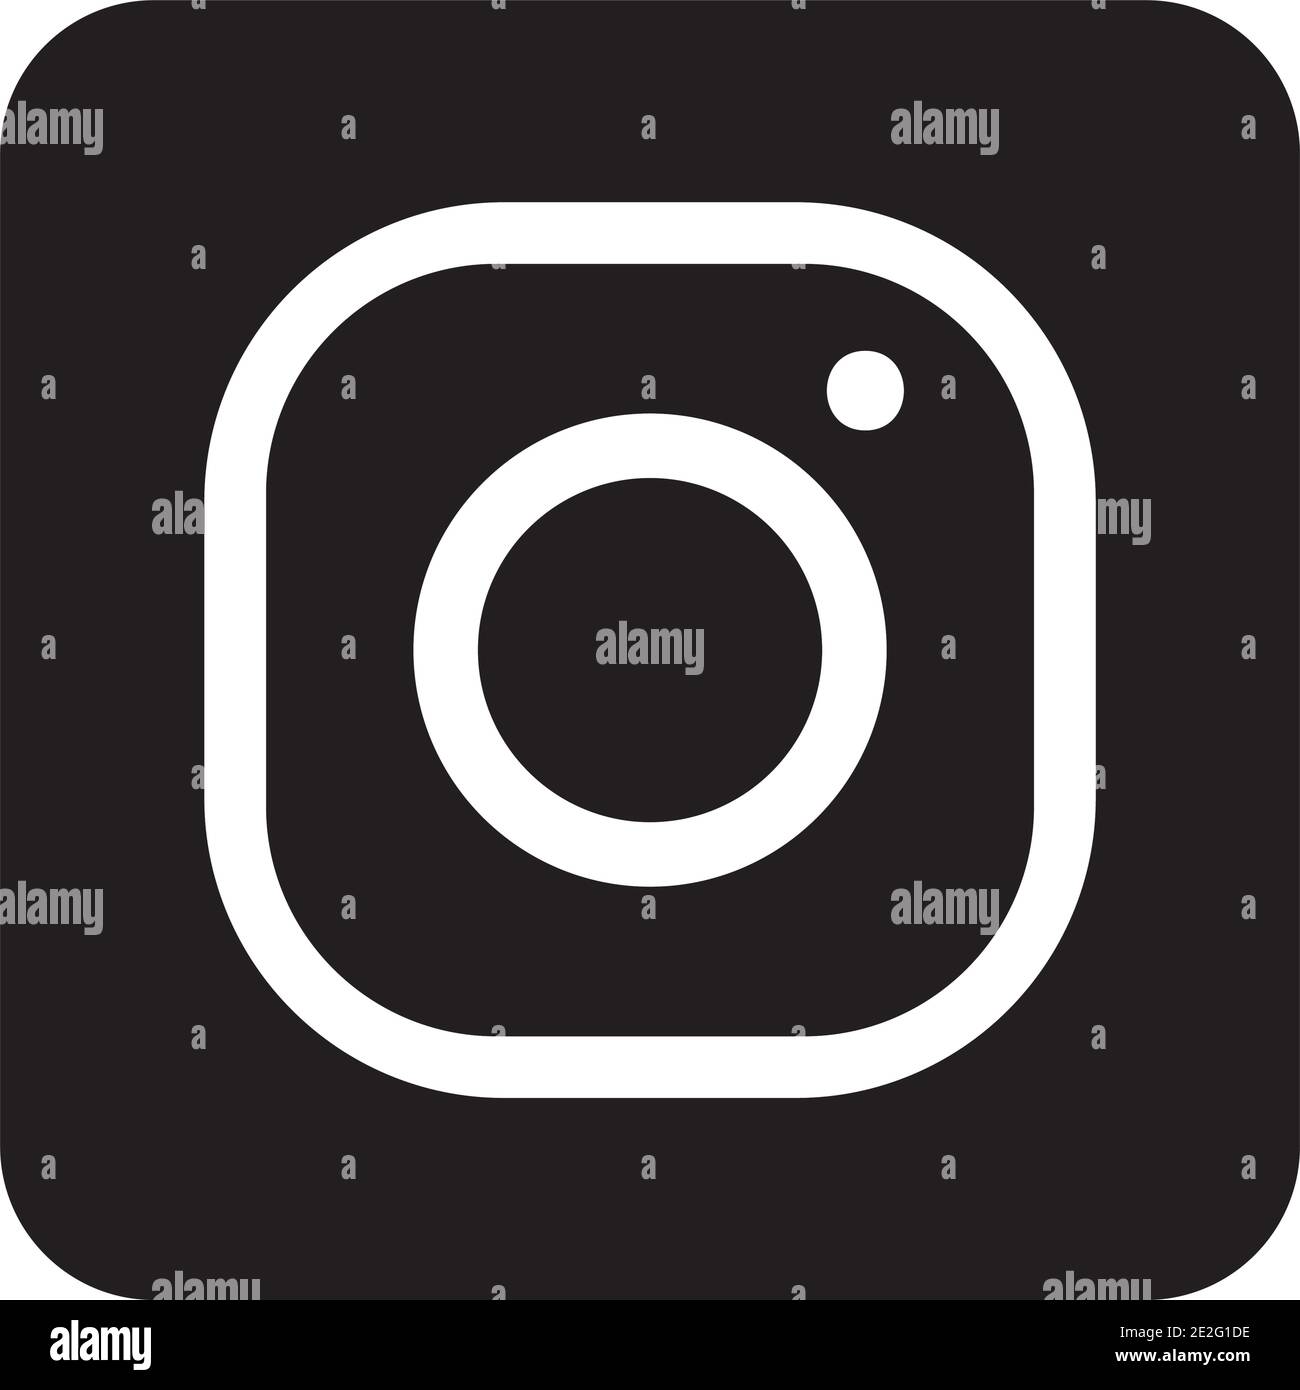 Instagram logo symbol icon over white background, silhouette ...